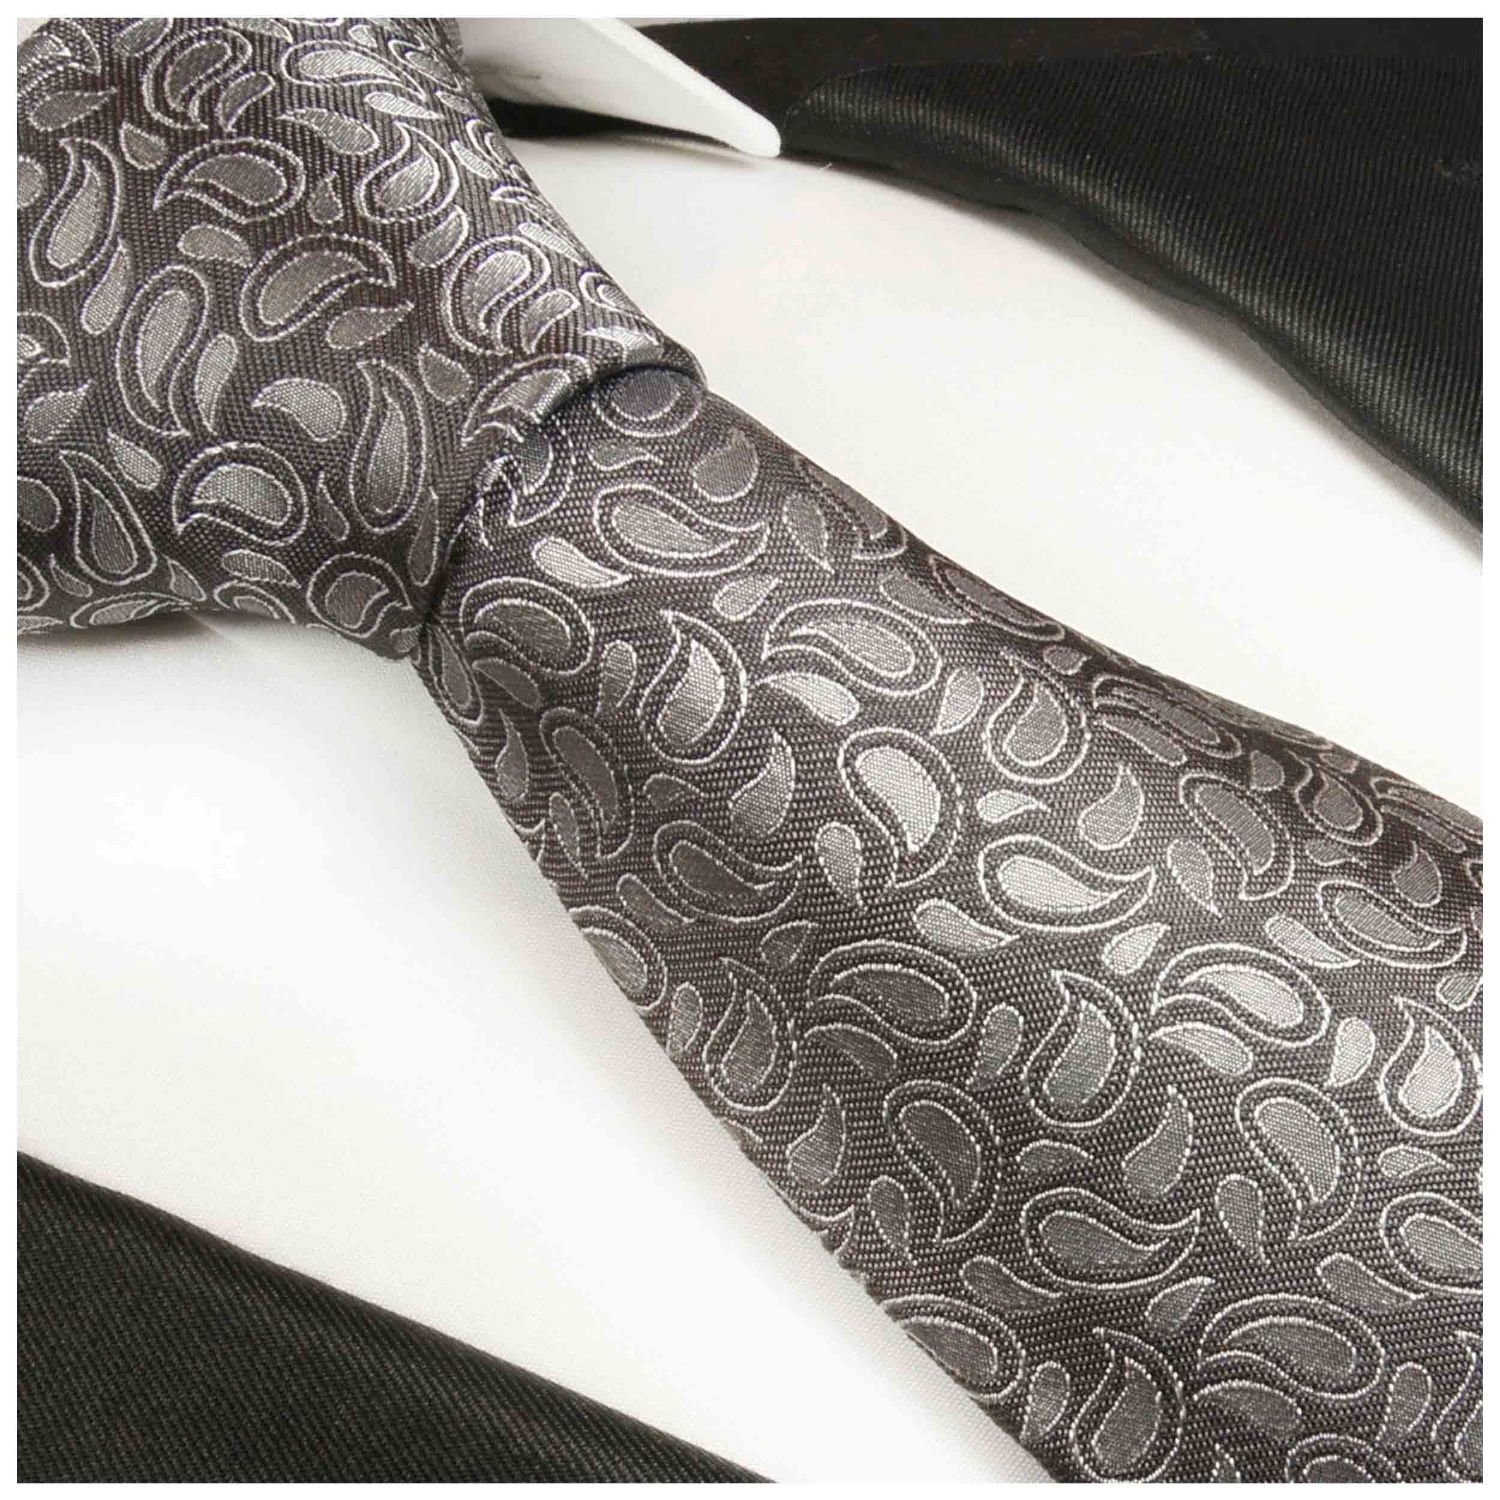 Paul Malone Krawatte Elegante Breit 100% Schlips grau 2005 silber Seide Seidenkrawatte (8cm), brokat paisley Herren